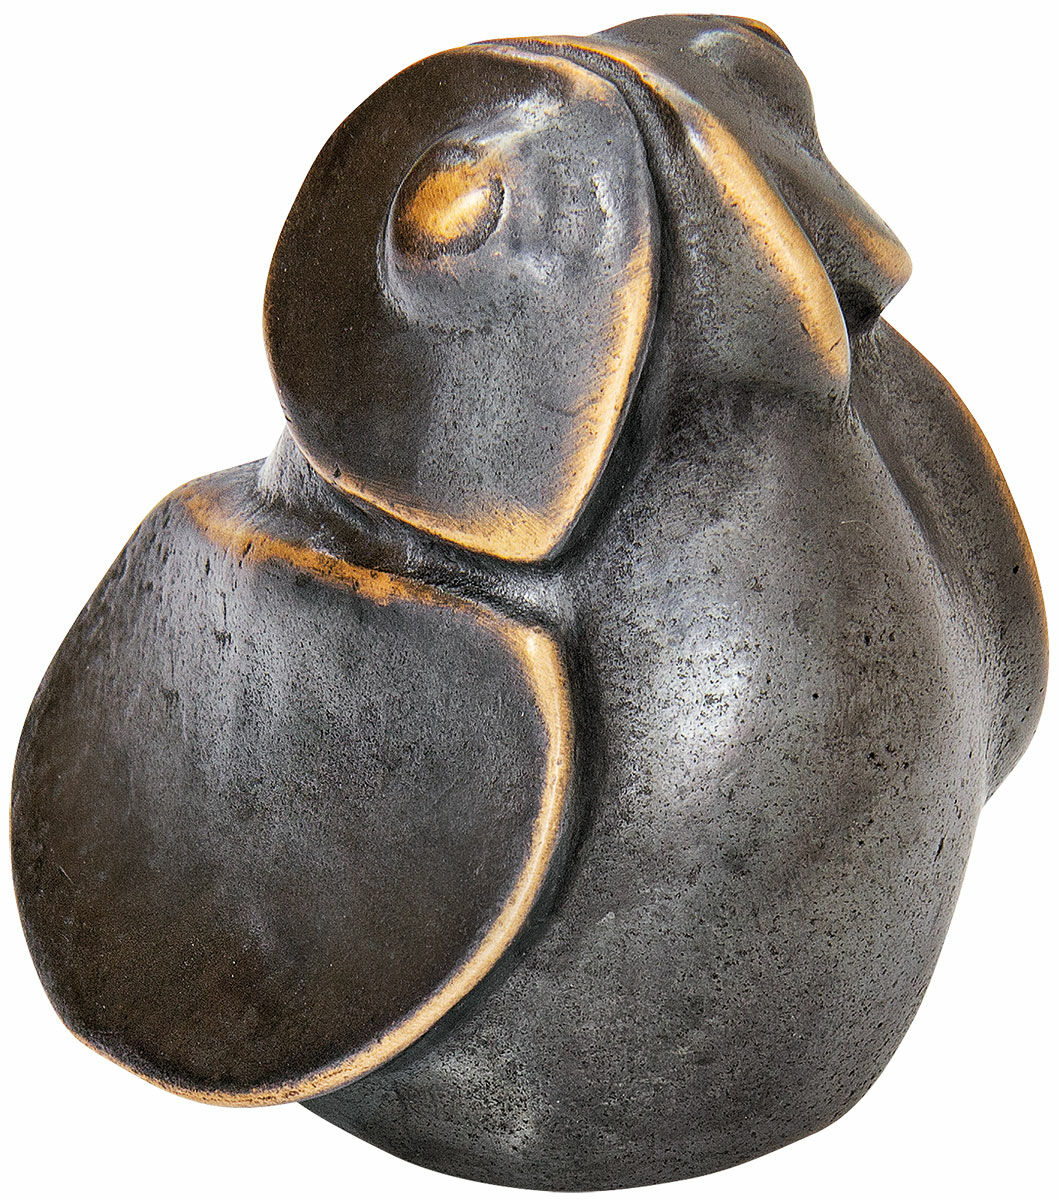 Miniatureskulptur "Ugle", bronze von Herbert Fricke